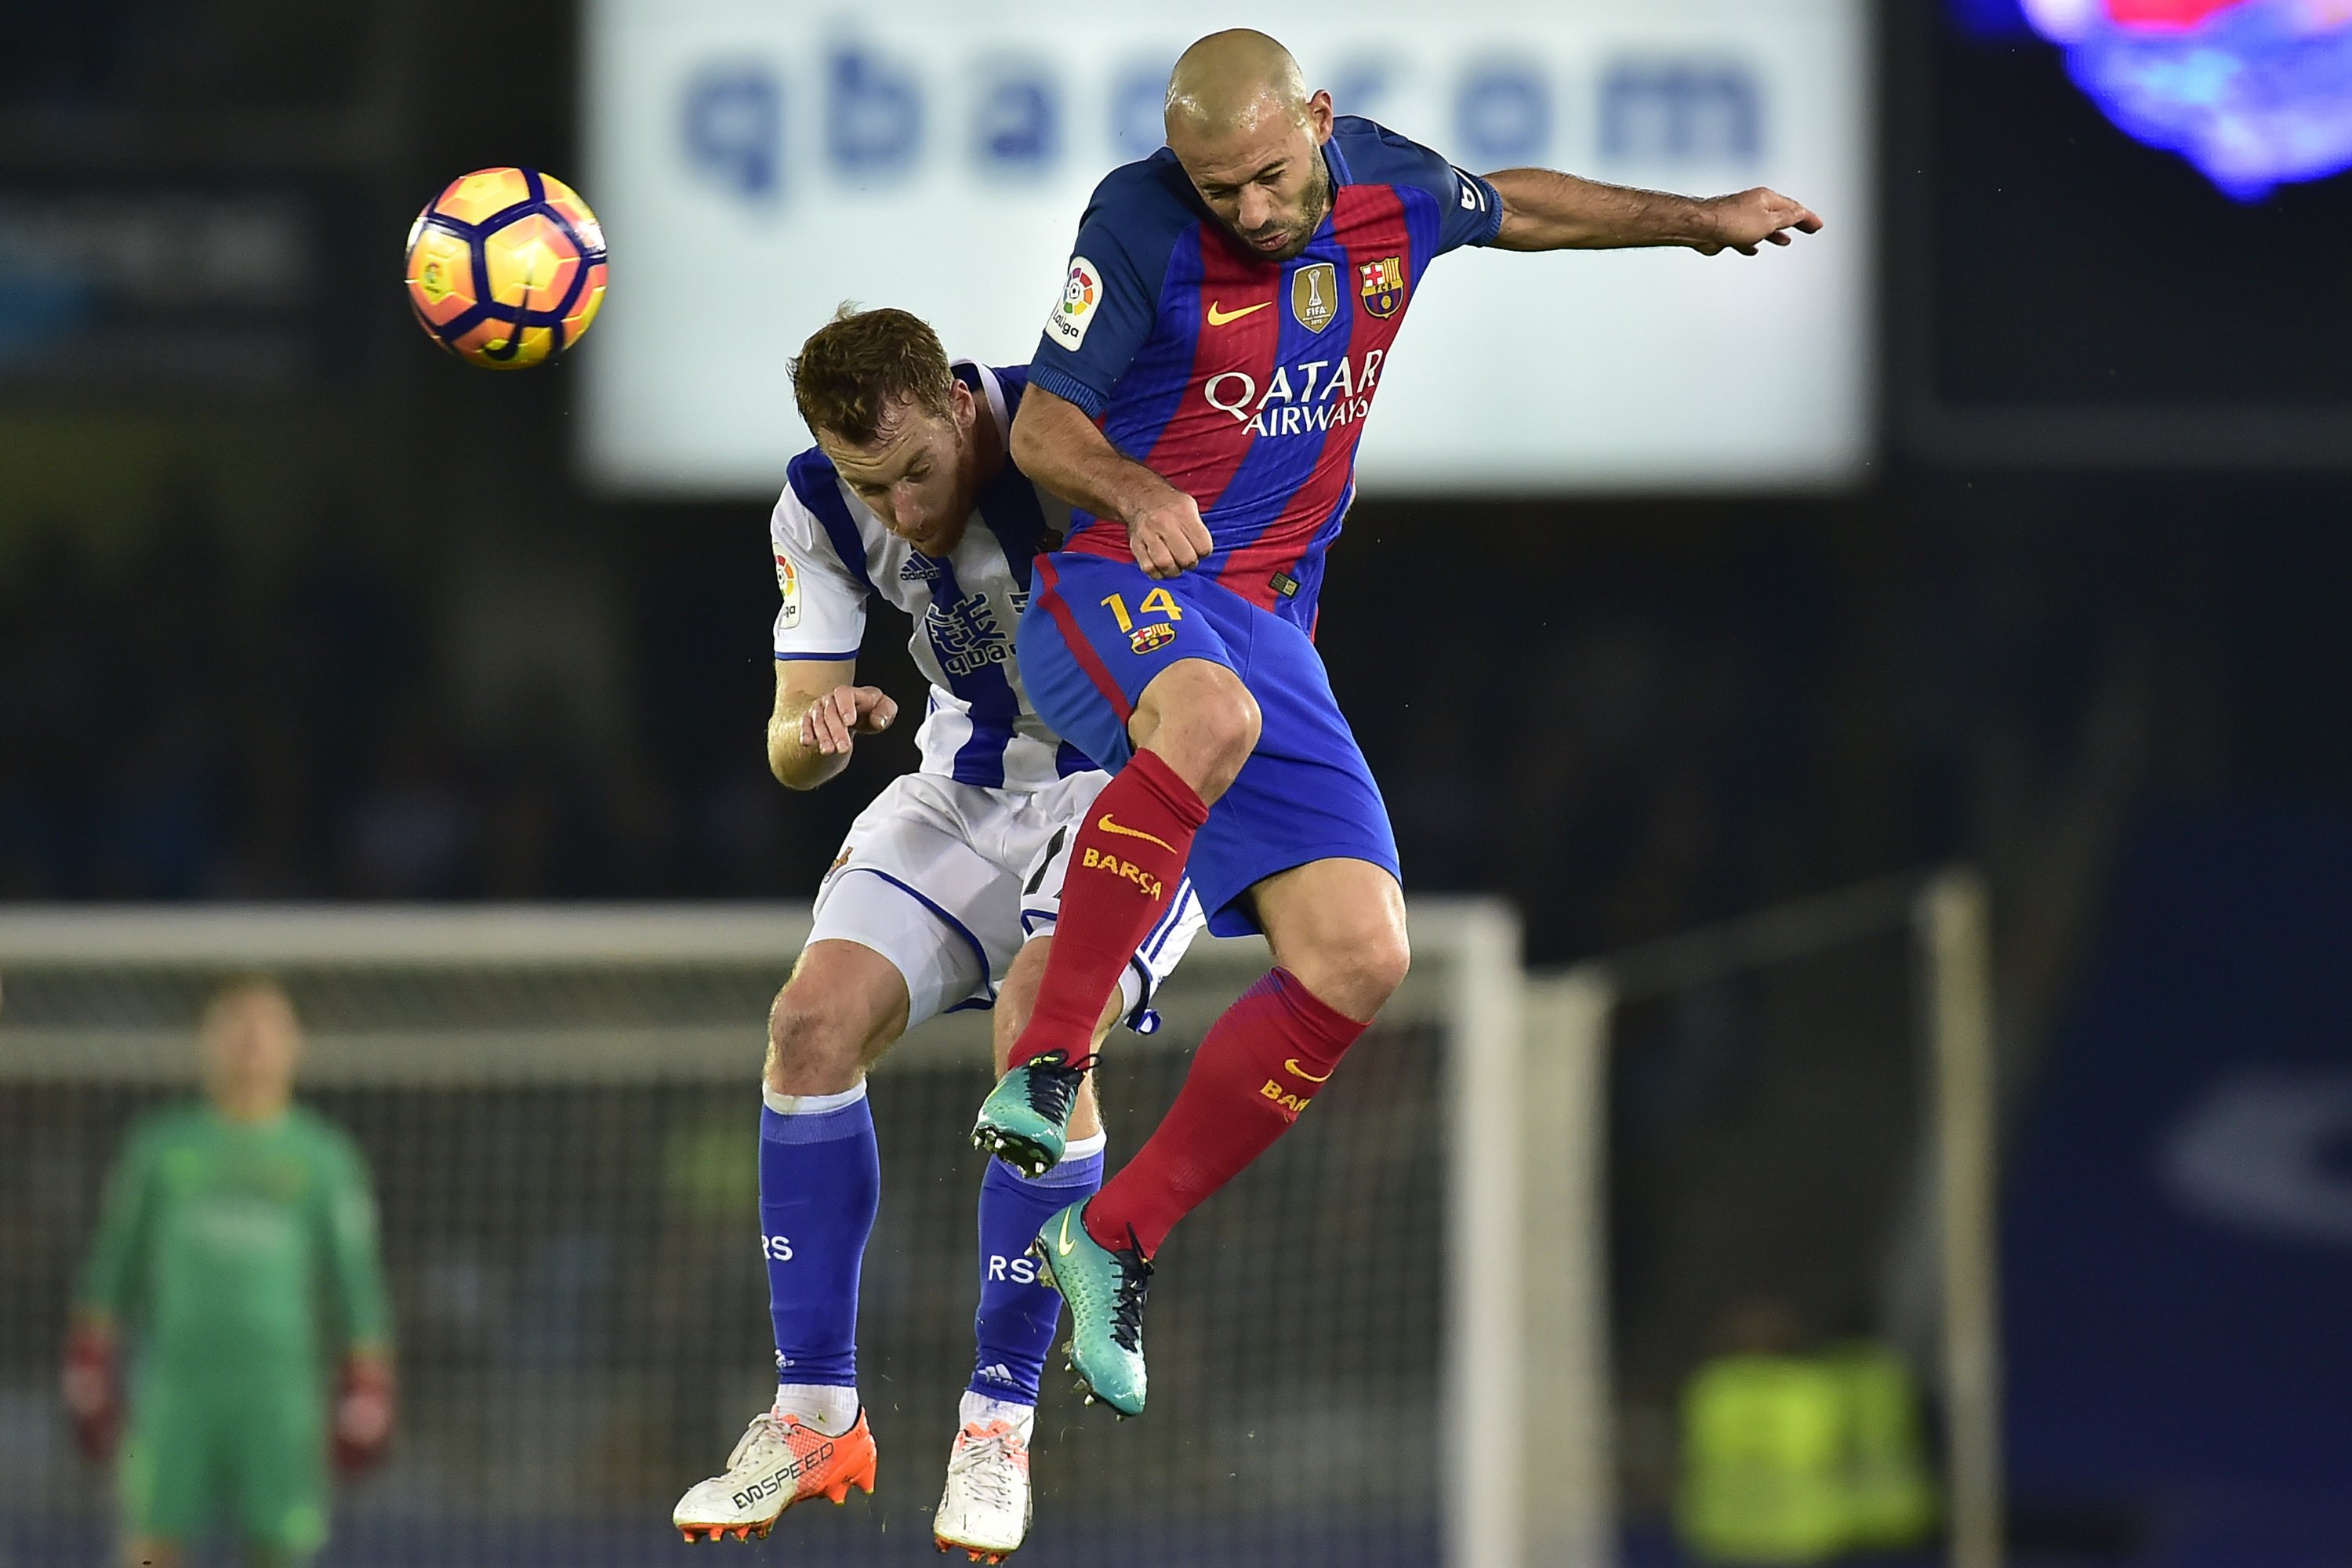 Soccer curse: Barca stumbles again at Sociedad with 1-1 draw | AP News